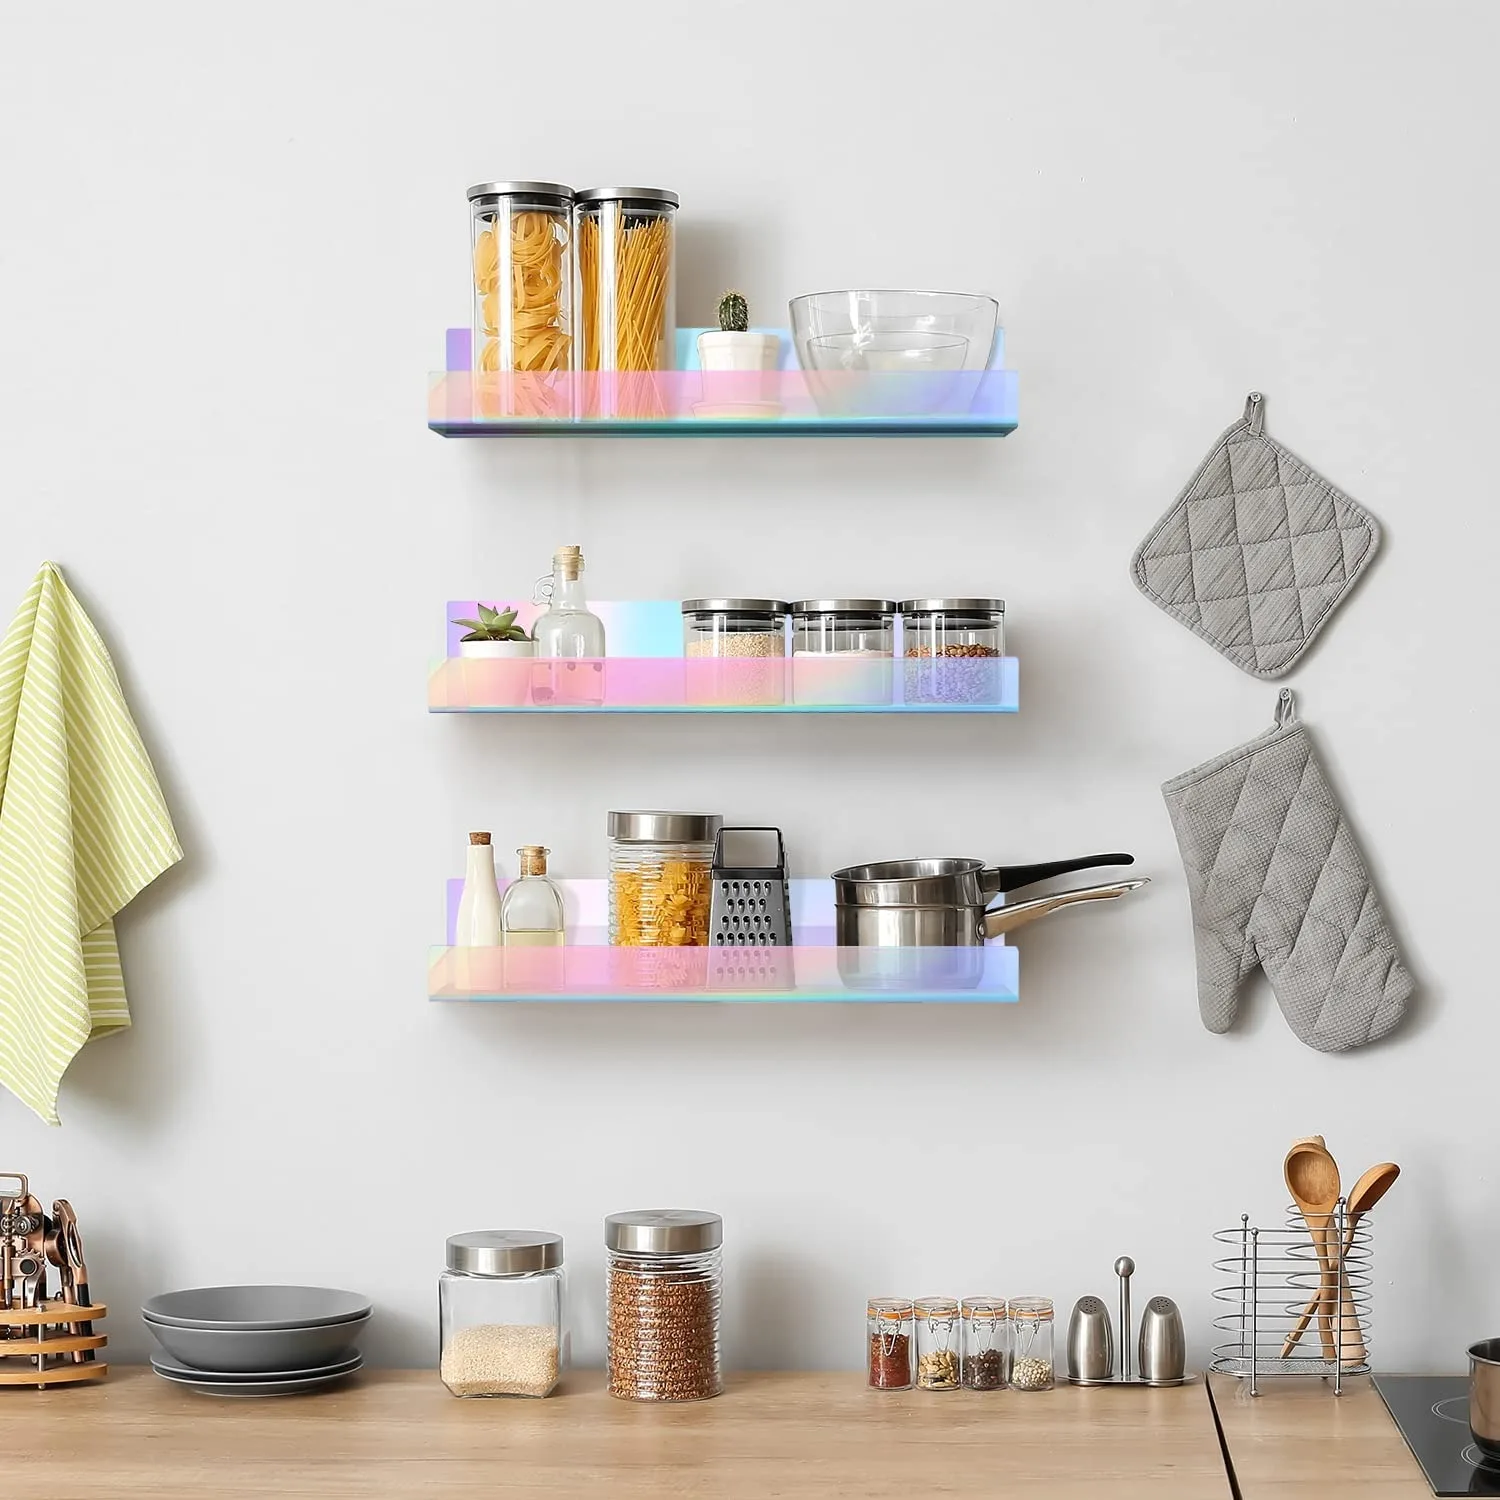 https://ae01.alicdn.com/kf/S874d96b21a664de7a0b99e4a5d12cd55x/2Pcs-Rainbow-Acrylic-Floating-Shelves-Wall-Mounted-Bathroom-Rack-Display-Shelf-for-Bedroom-Living-Room-Kitchen.jpg